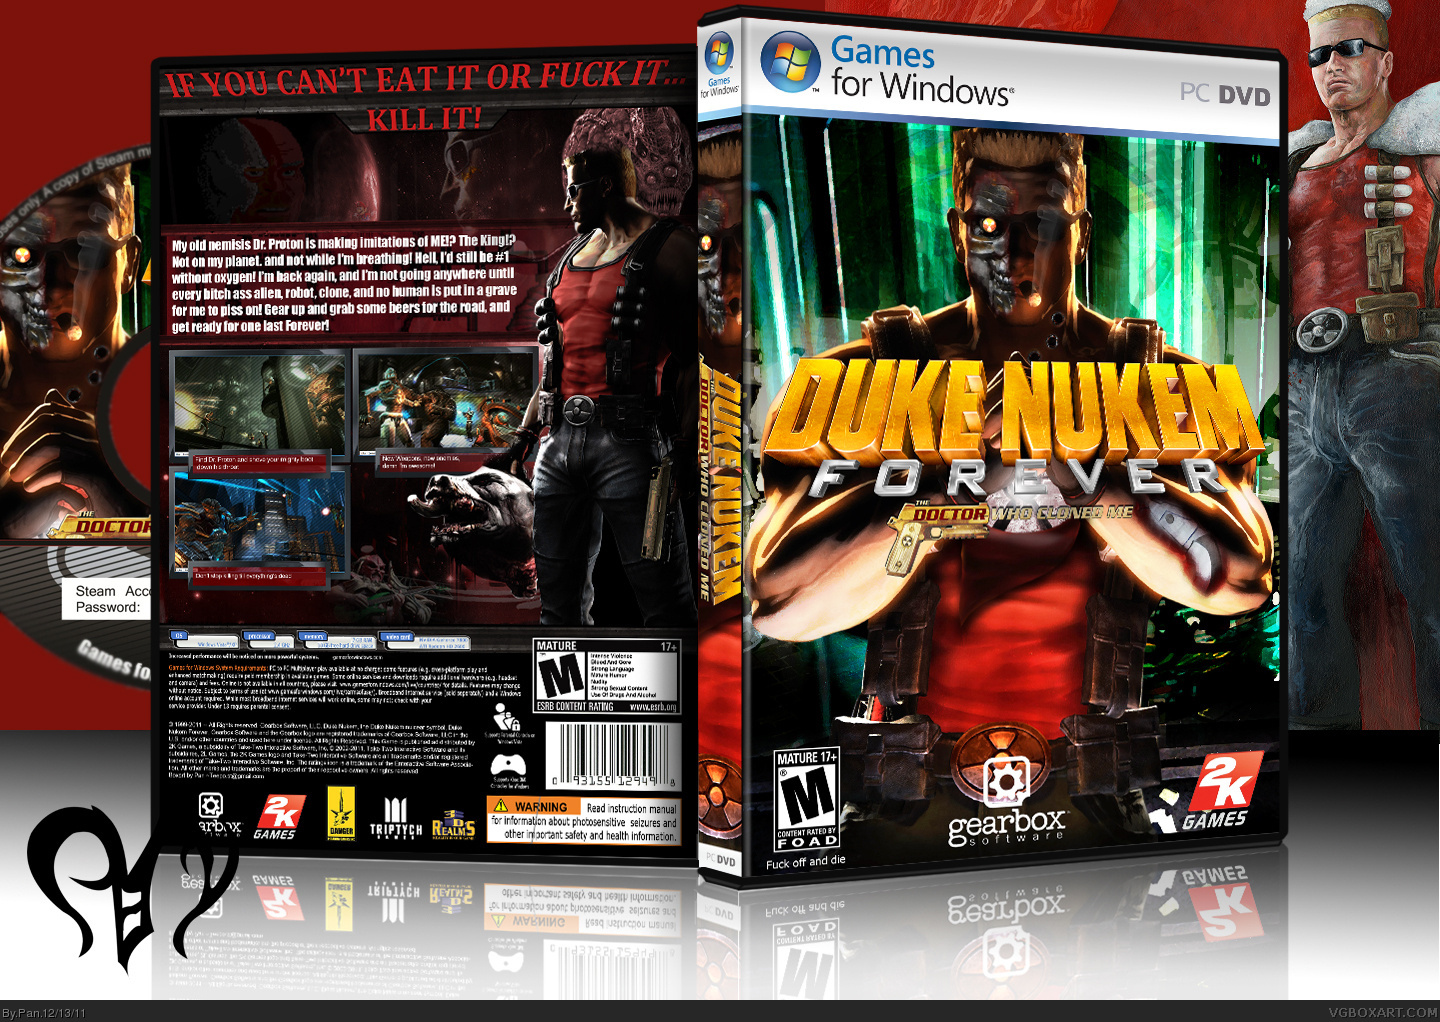 Duke Nukem Forever: The Dr. Who Cloned Me box cover